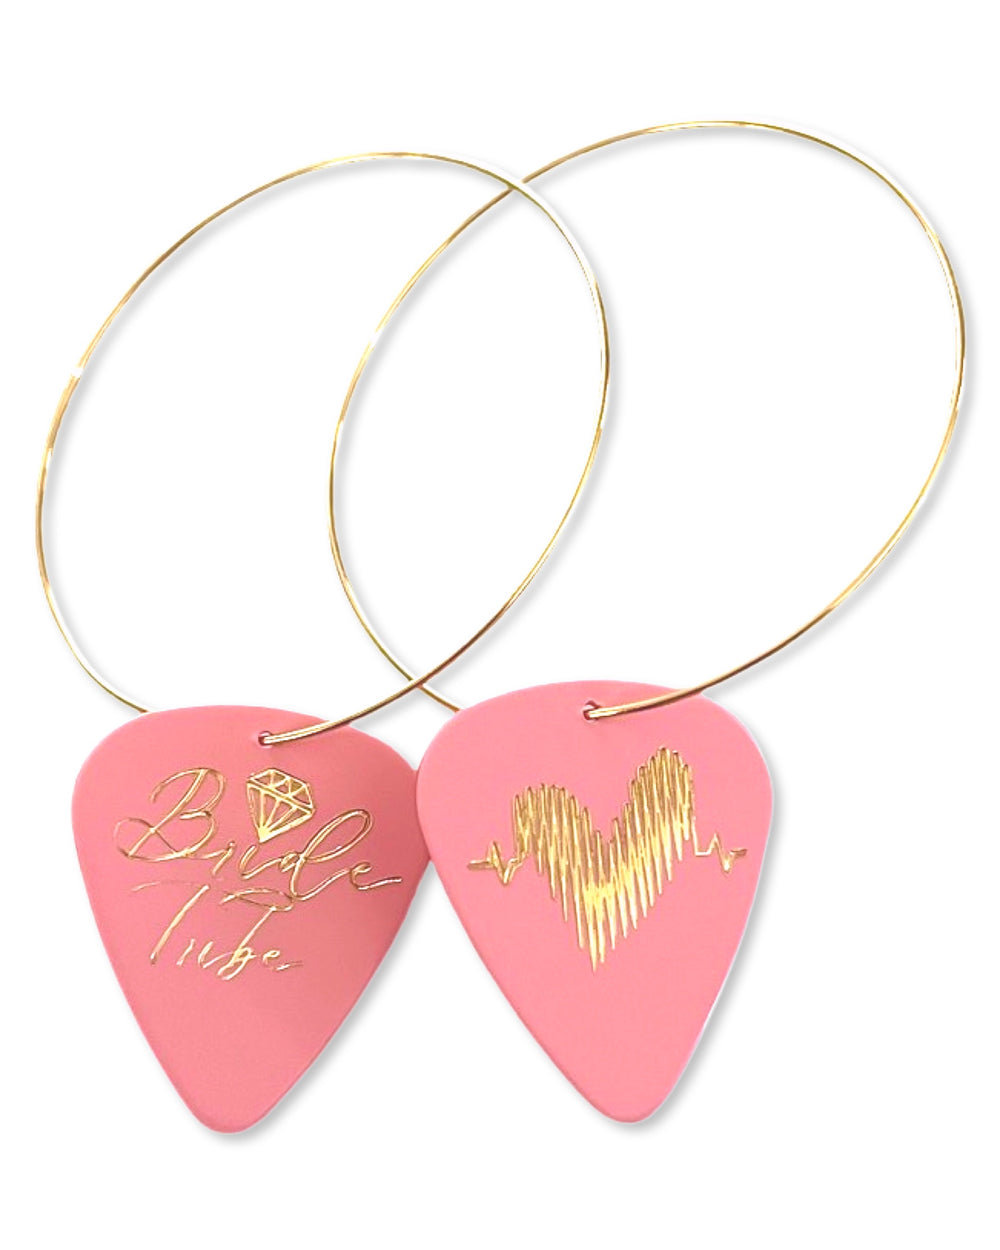 WS Bride Tribe Pink Gold Reversible Single Guitar Pick Earrings